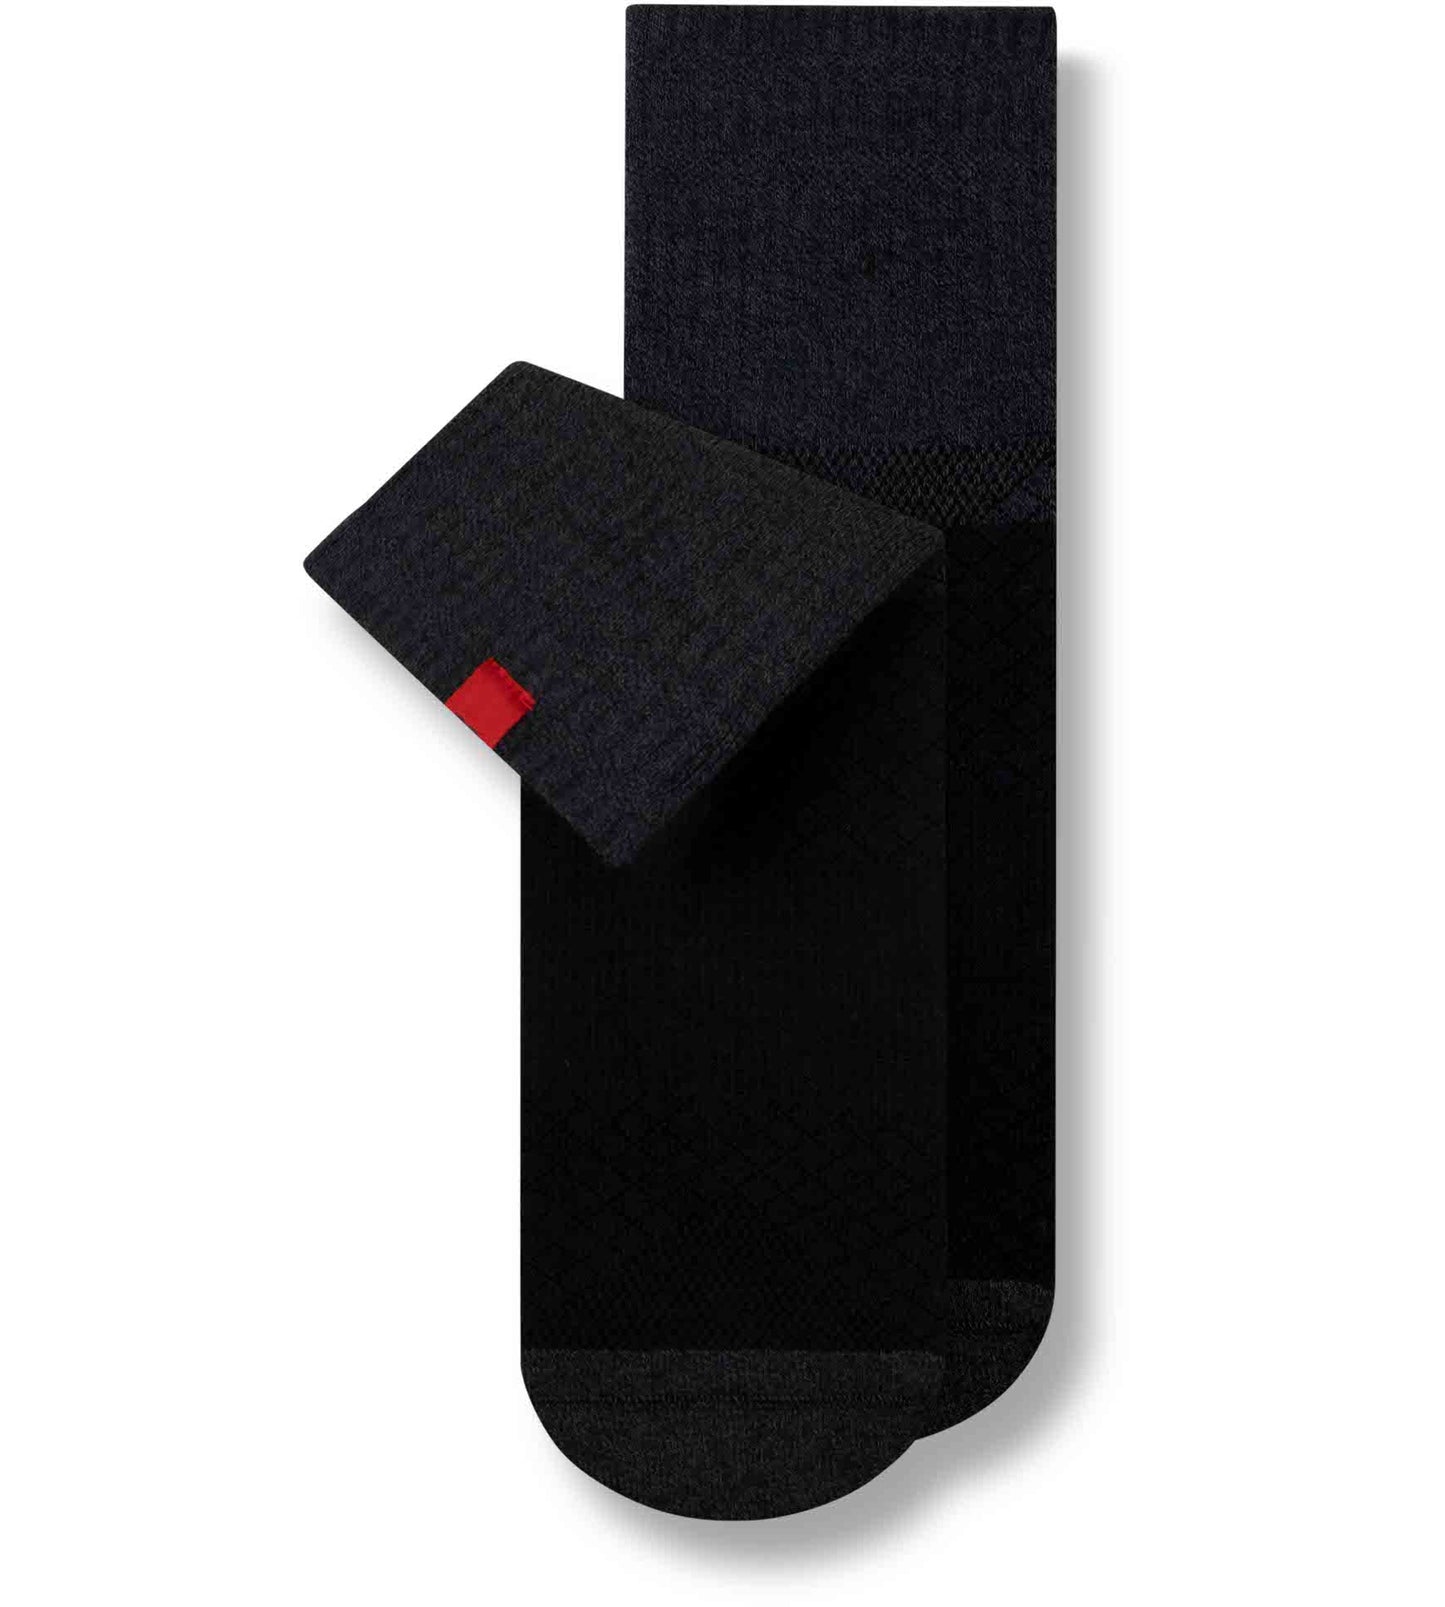 Hustle Cushion Ankle Socks 3 Pack colors contain: Black, Dark Gray, Fire brick, Dark slate gray, Black, Light Gray, Gains boro, Dim gray, Black